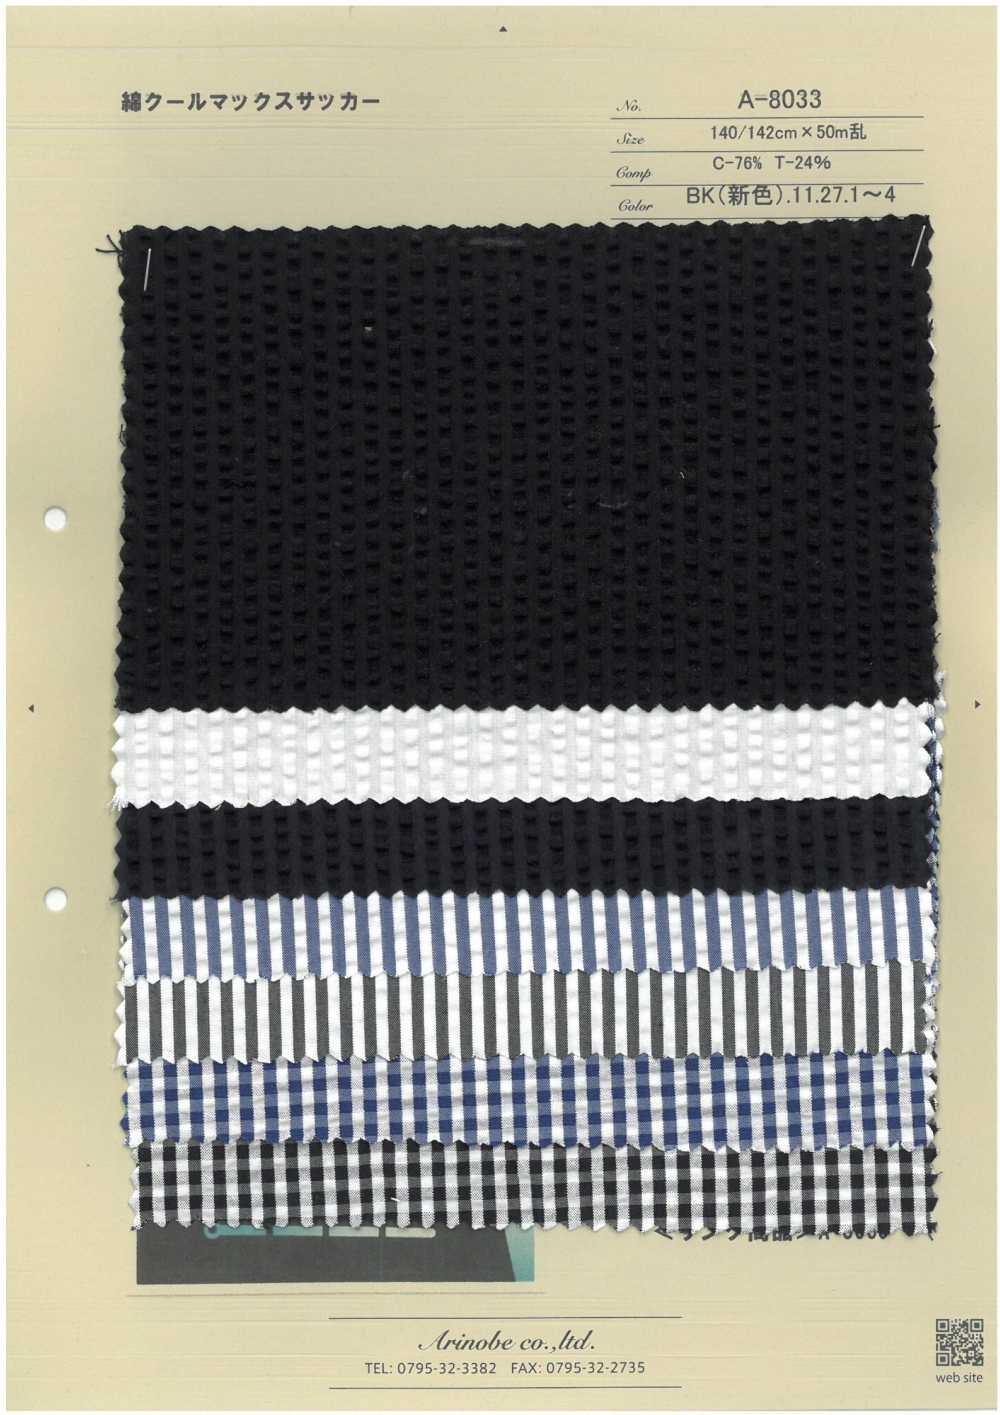 A-8033 Cotton Coolmax Seersucker[Textile / Fabric] ARINOBE CO., LTD.